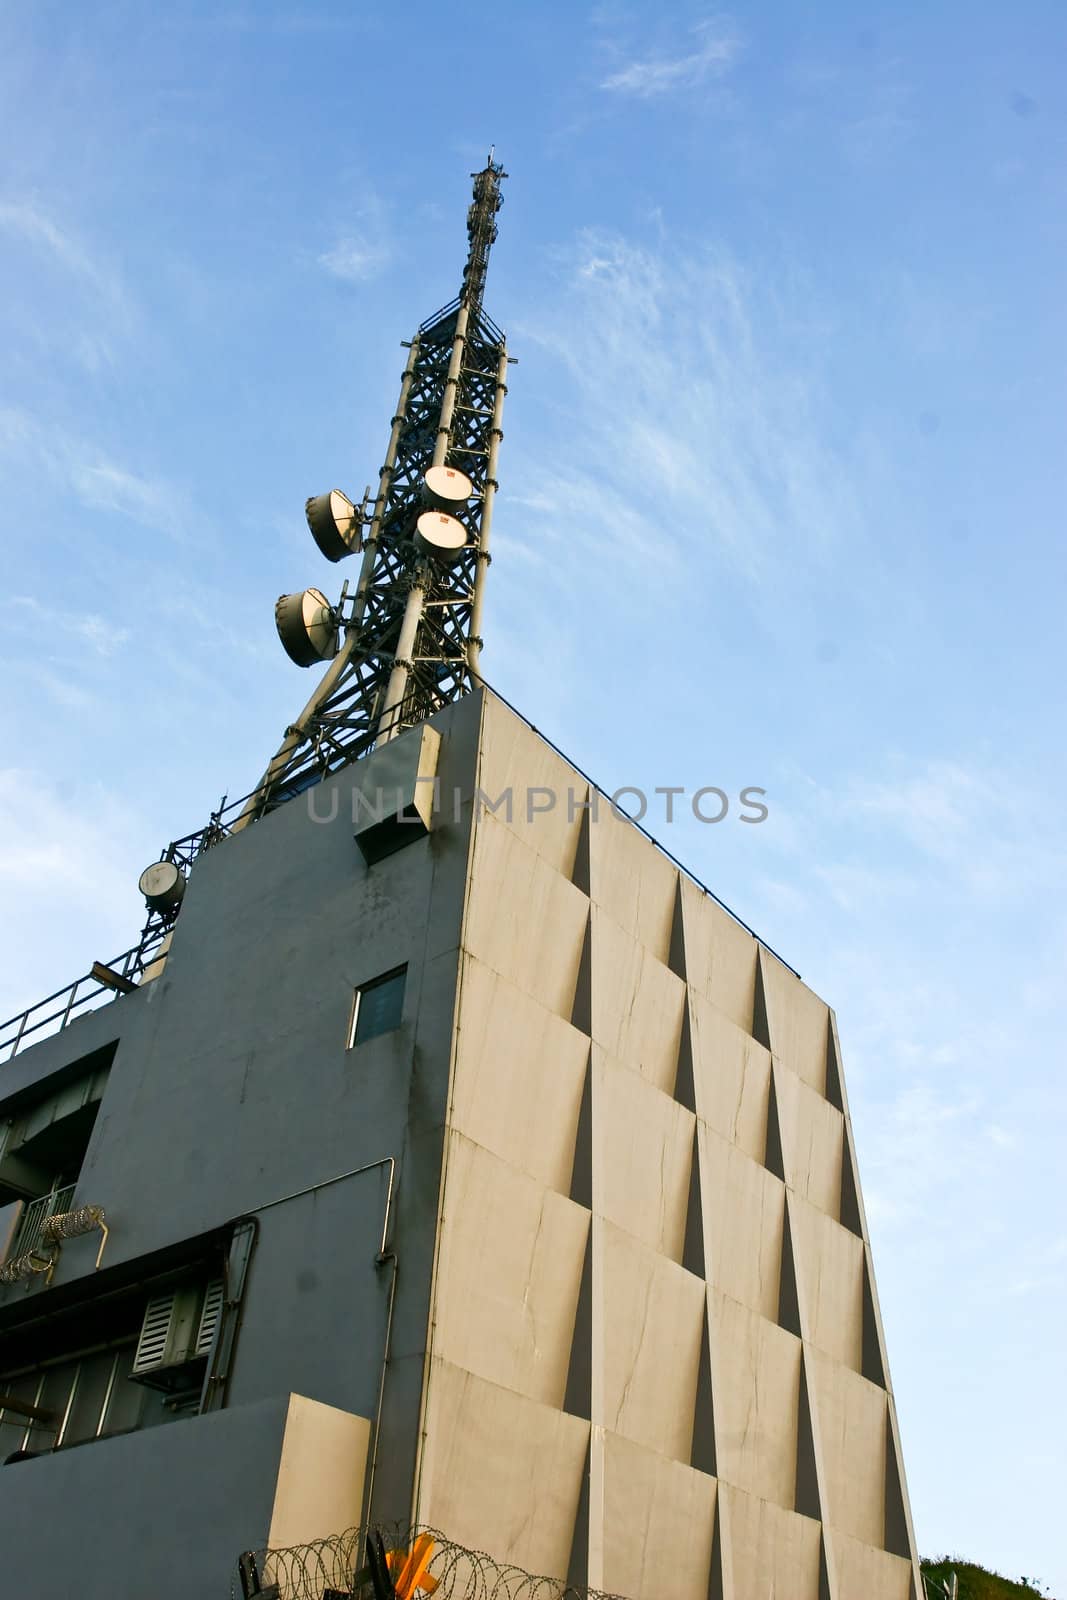 Transmitting station in a peak under blue sky